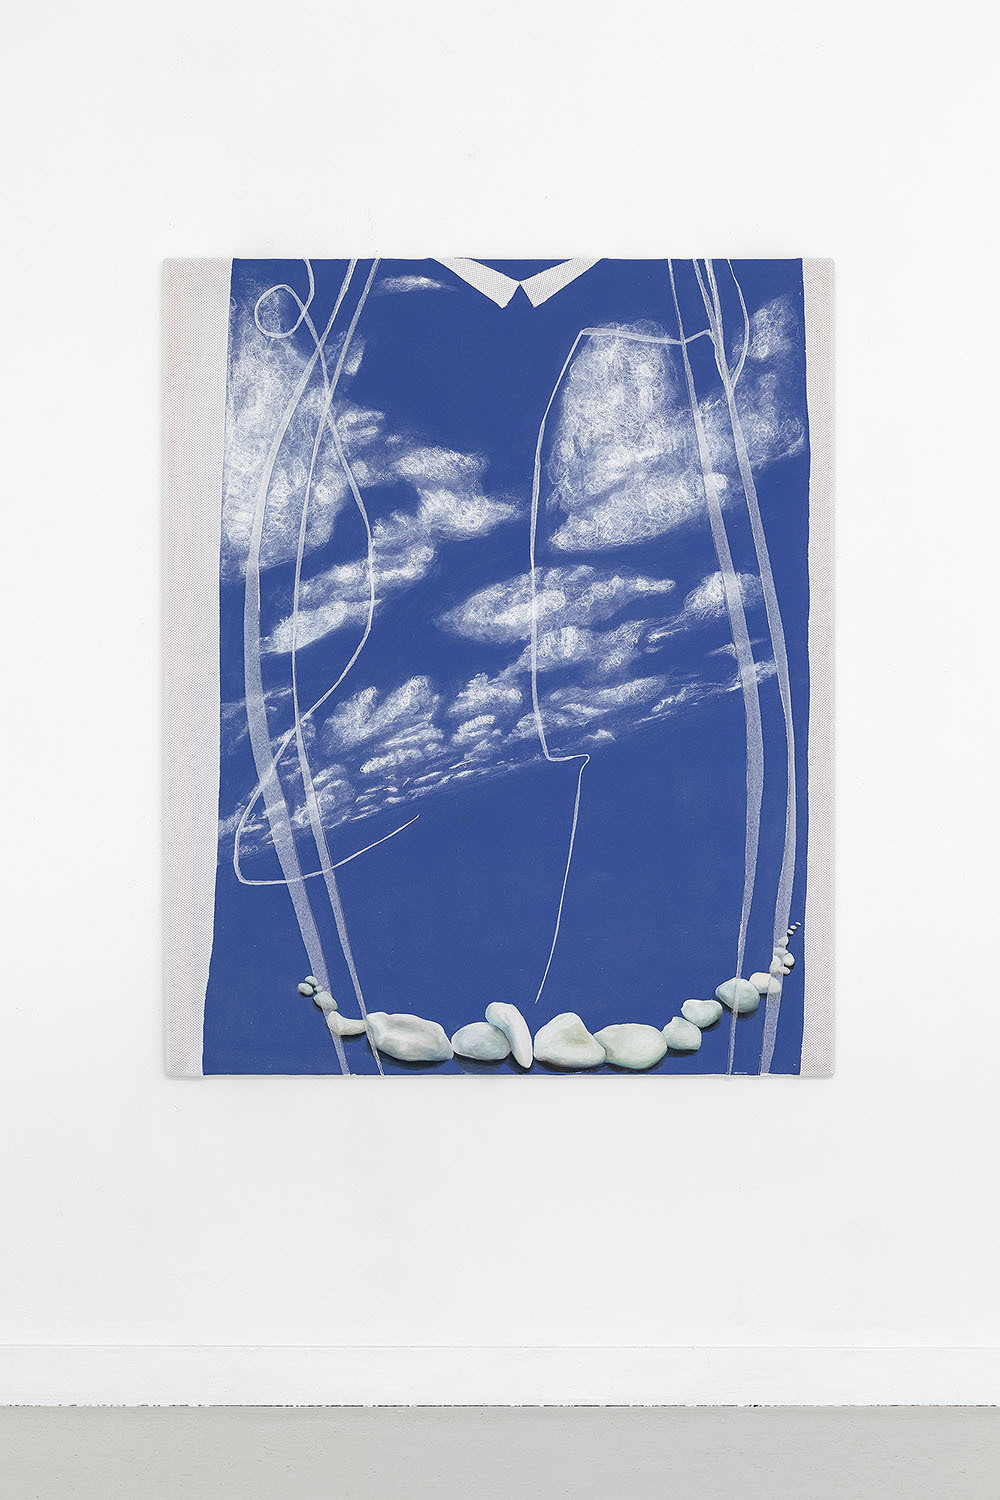 Mathilde Ganancia, Le Blues de la terre, 2020, mixed media, 135 x 110 cm